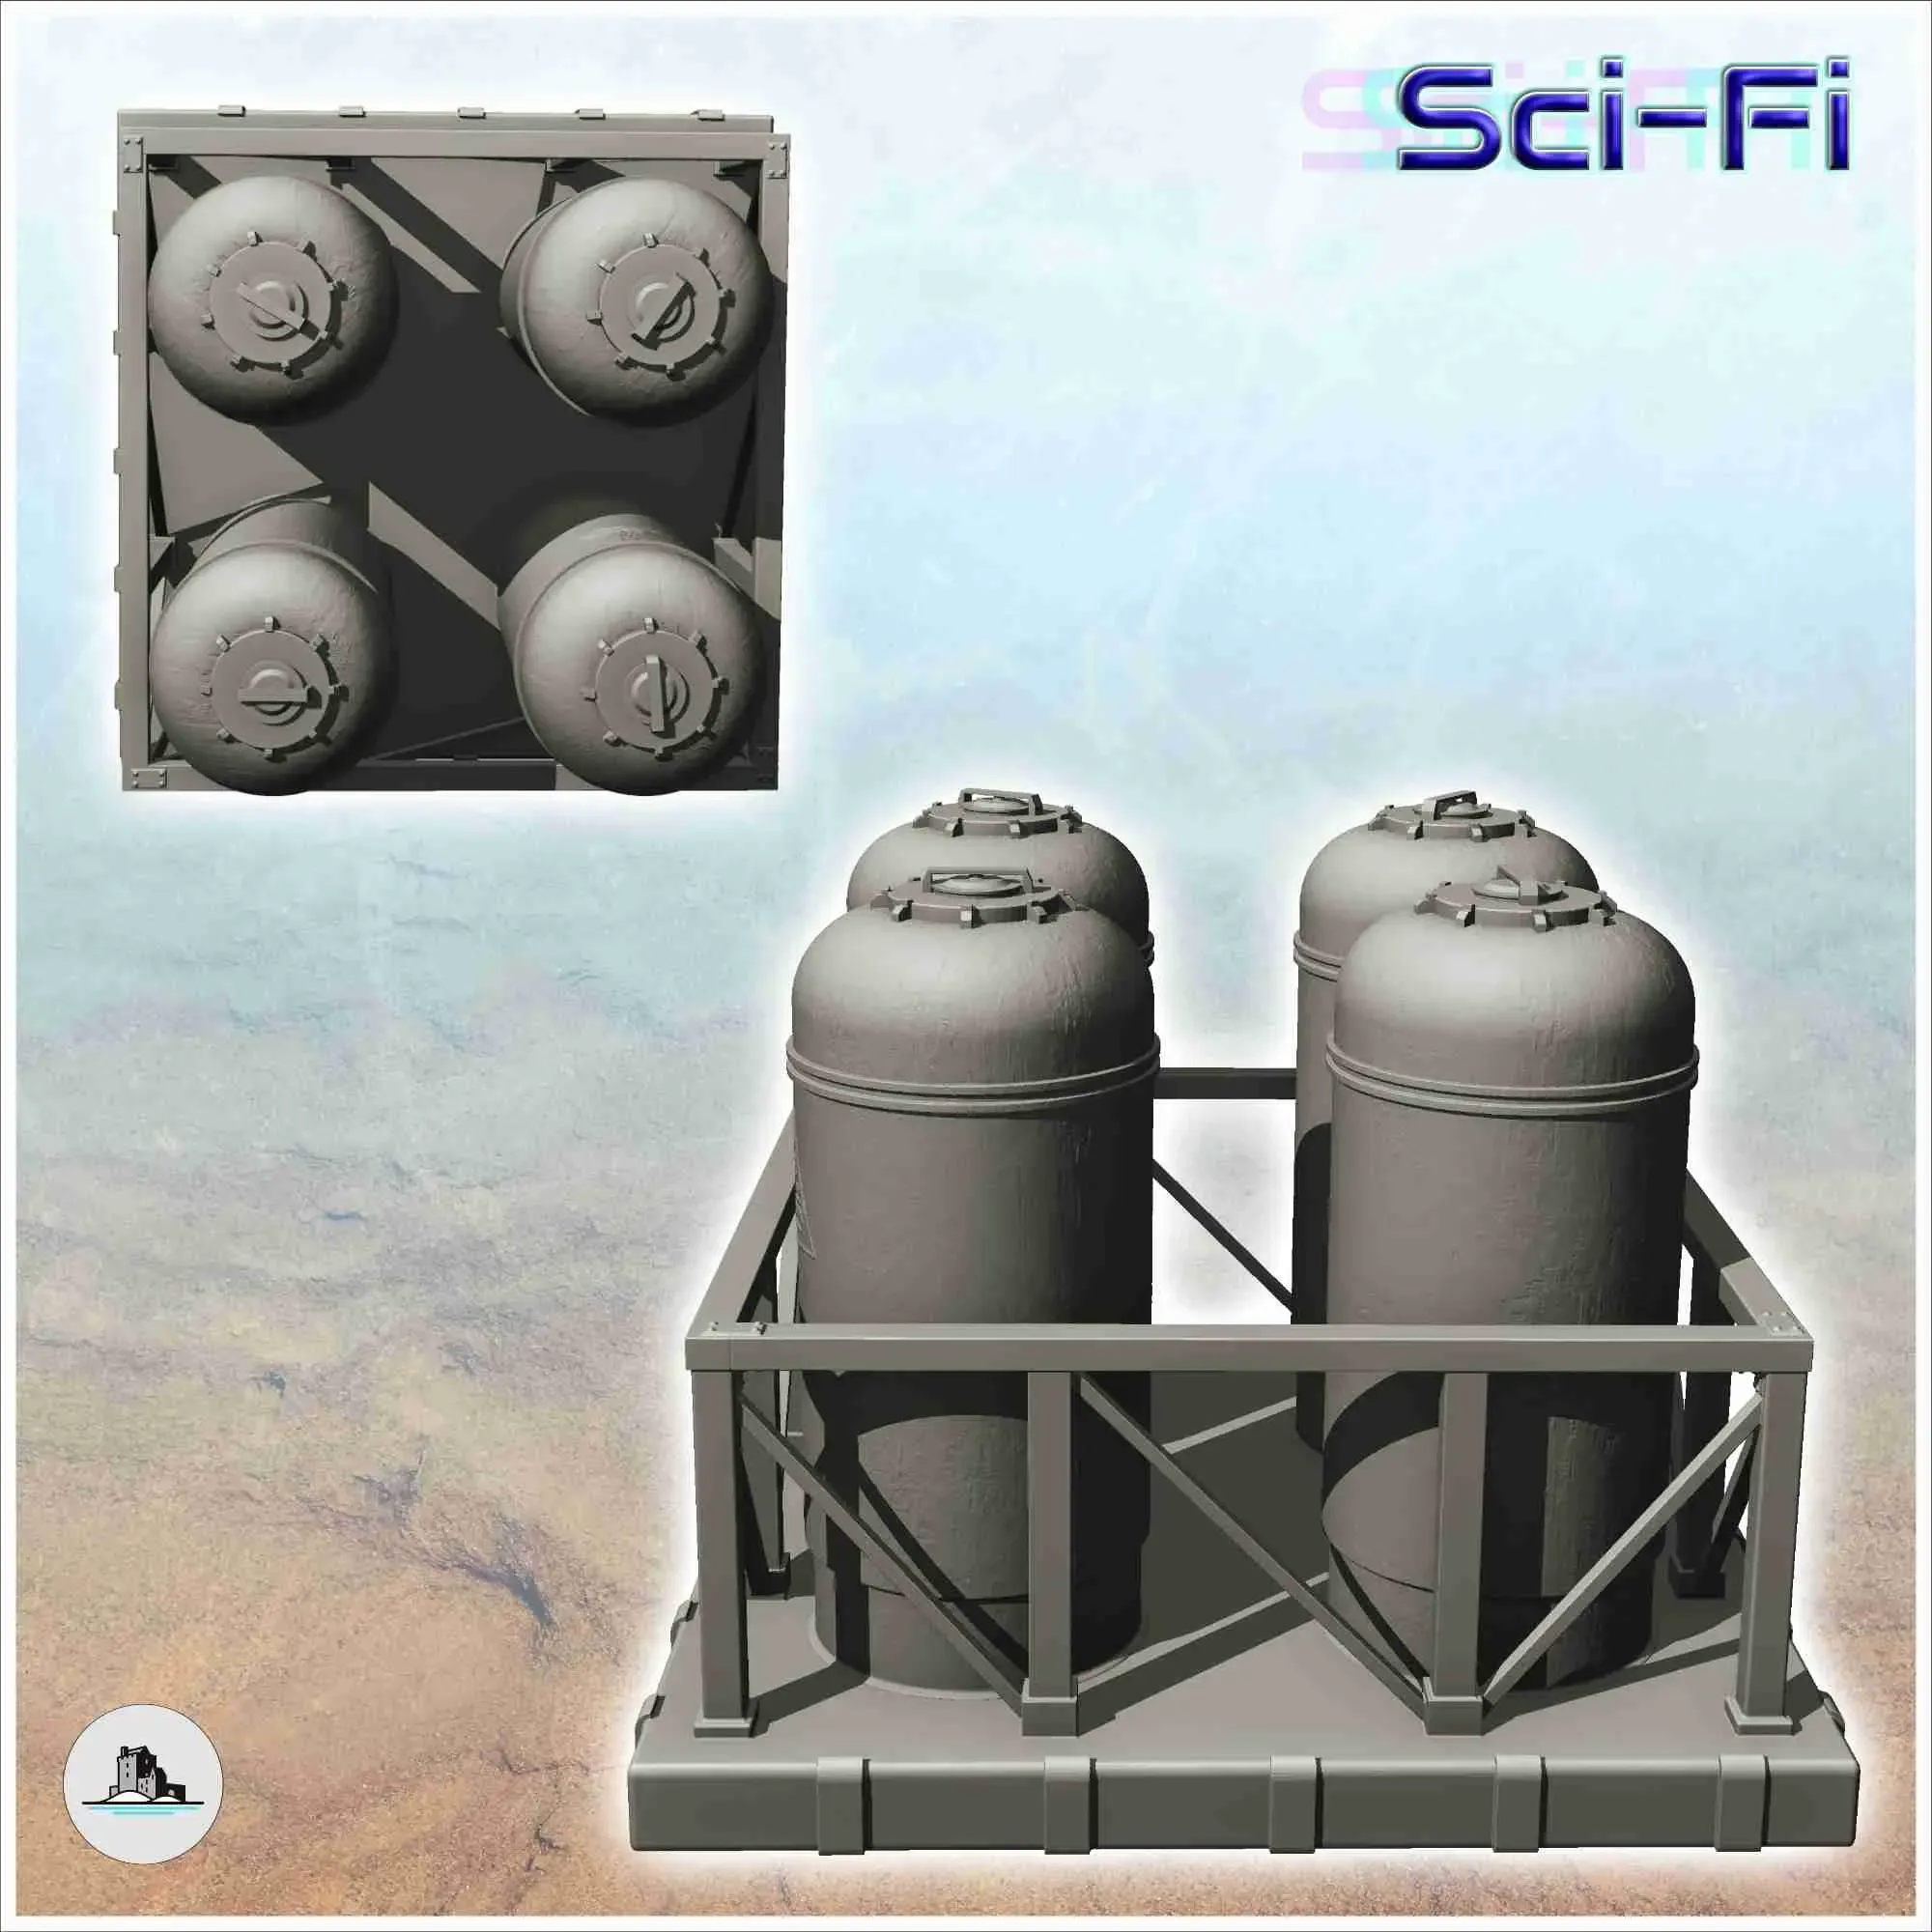 Cryogenic storage platform with four silos (21) - science fi